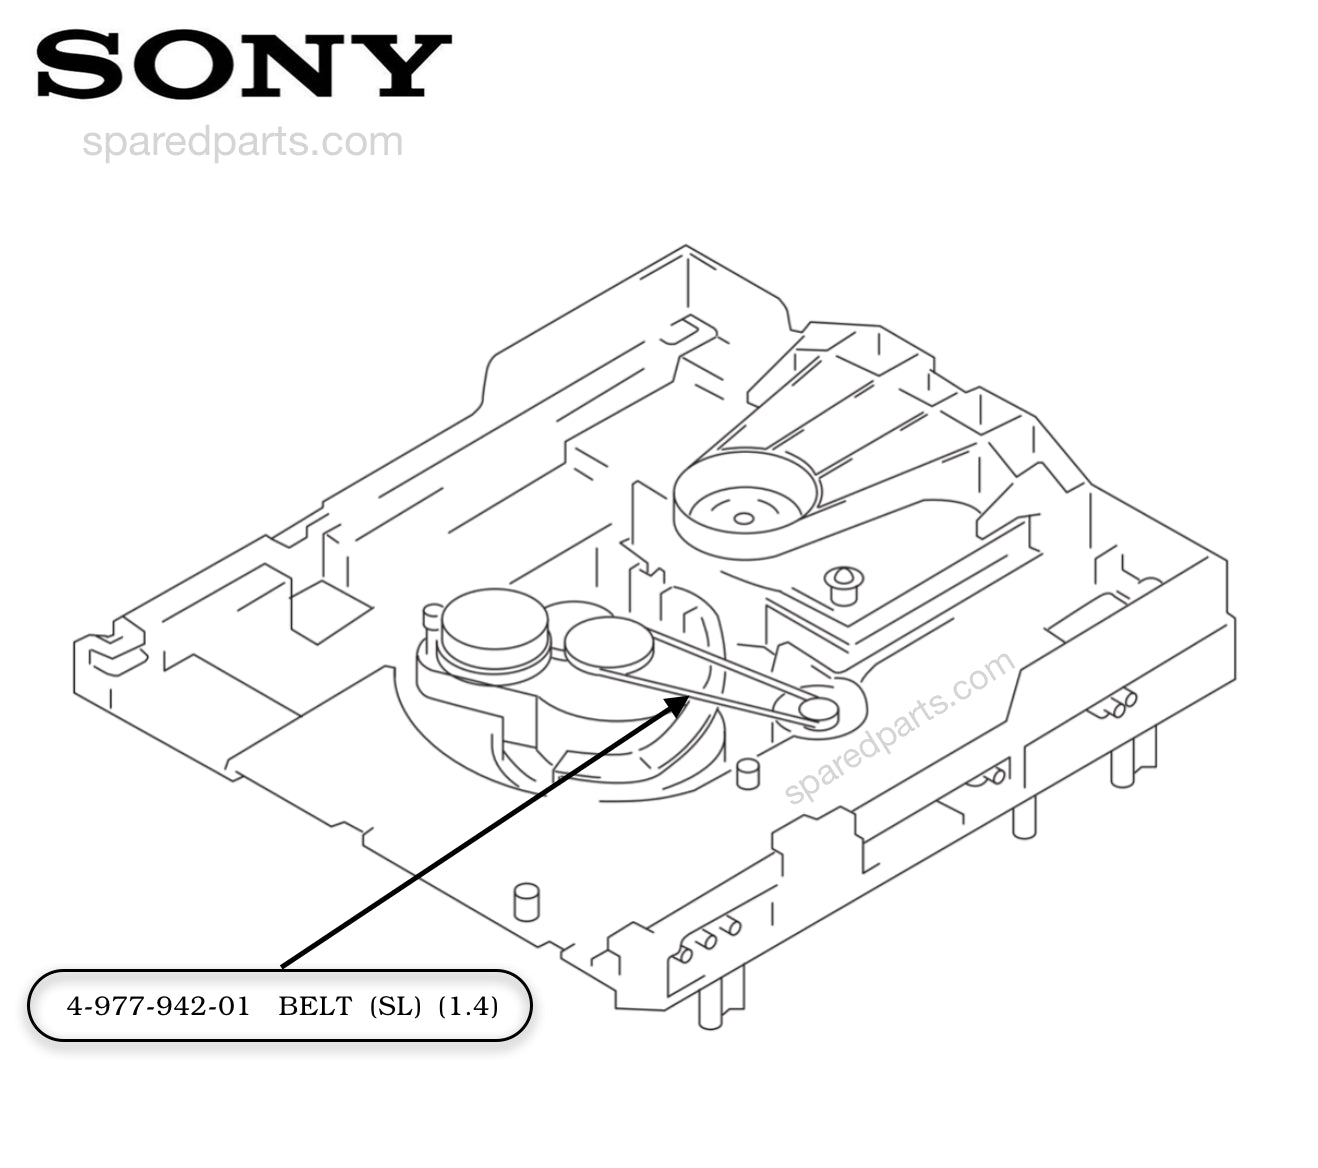 Sony Belt (SL) (1.4) 497794201, 4-977-942-01